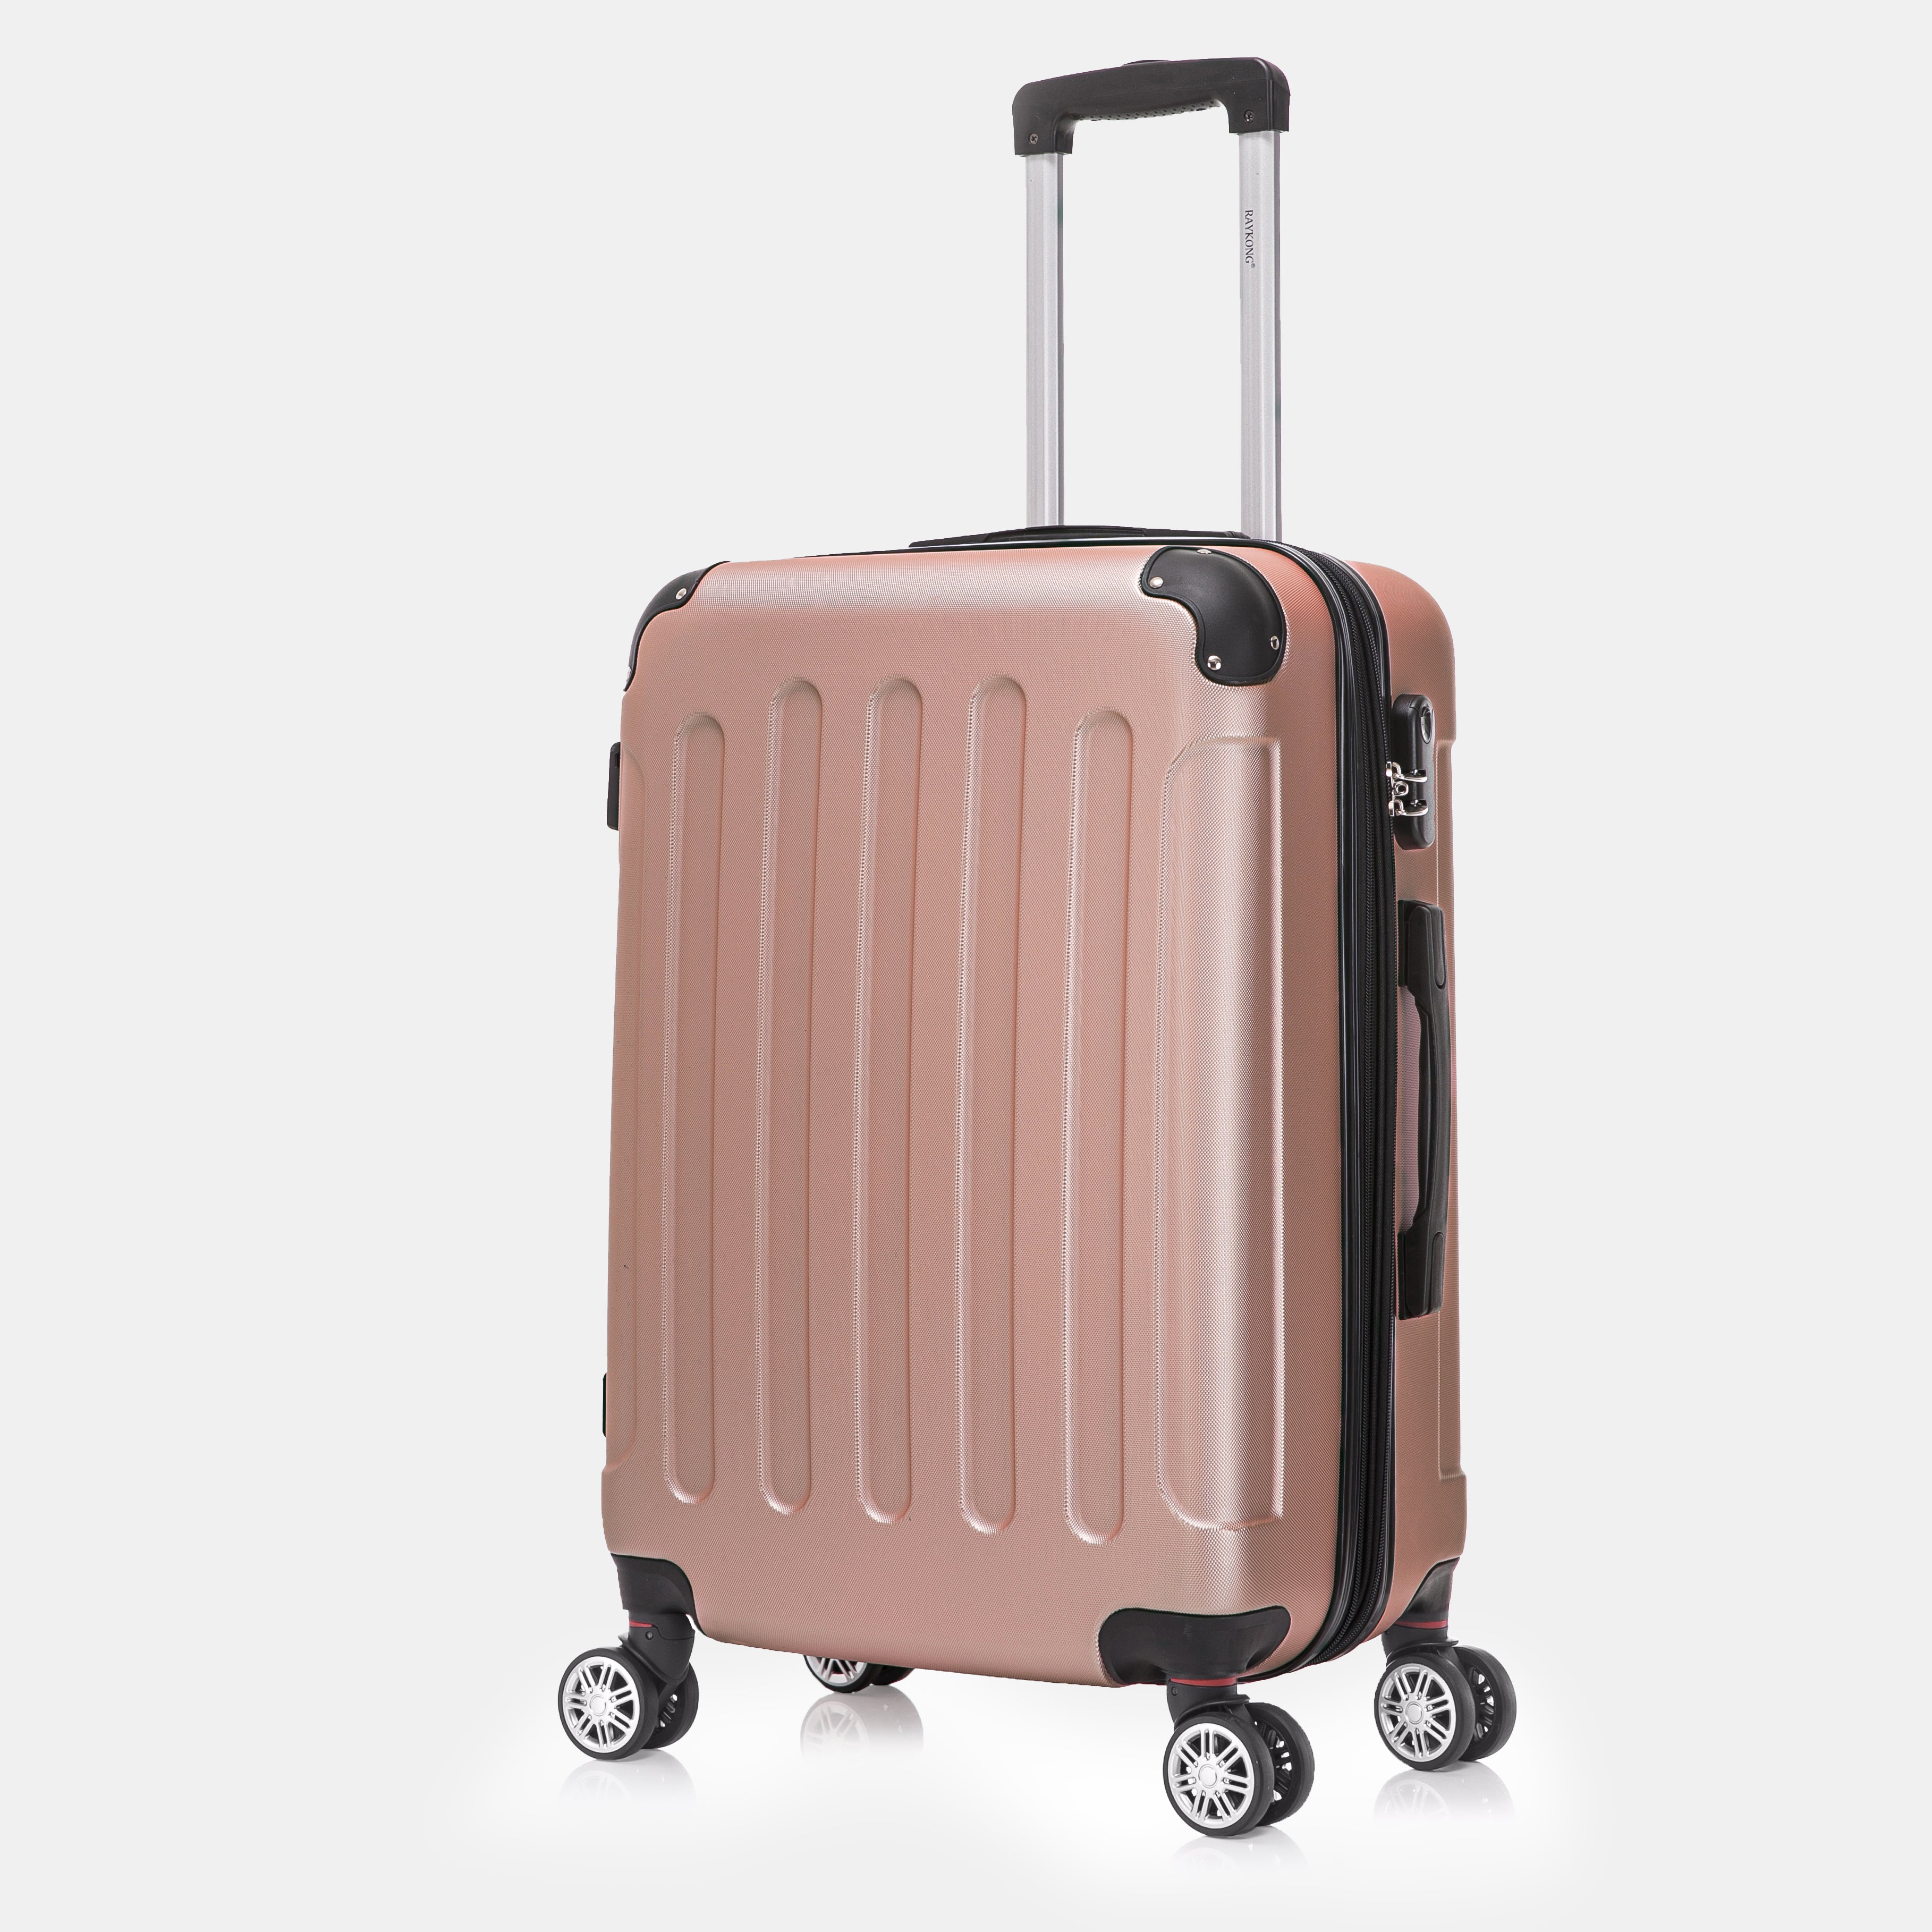 Maleta de viaje extensible mediana M-66cm-23kg, maleta de viaje barata, de  ABS rosa dorada – 1990s